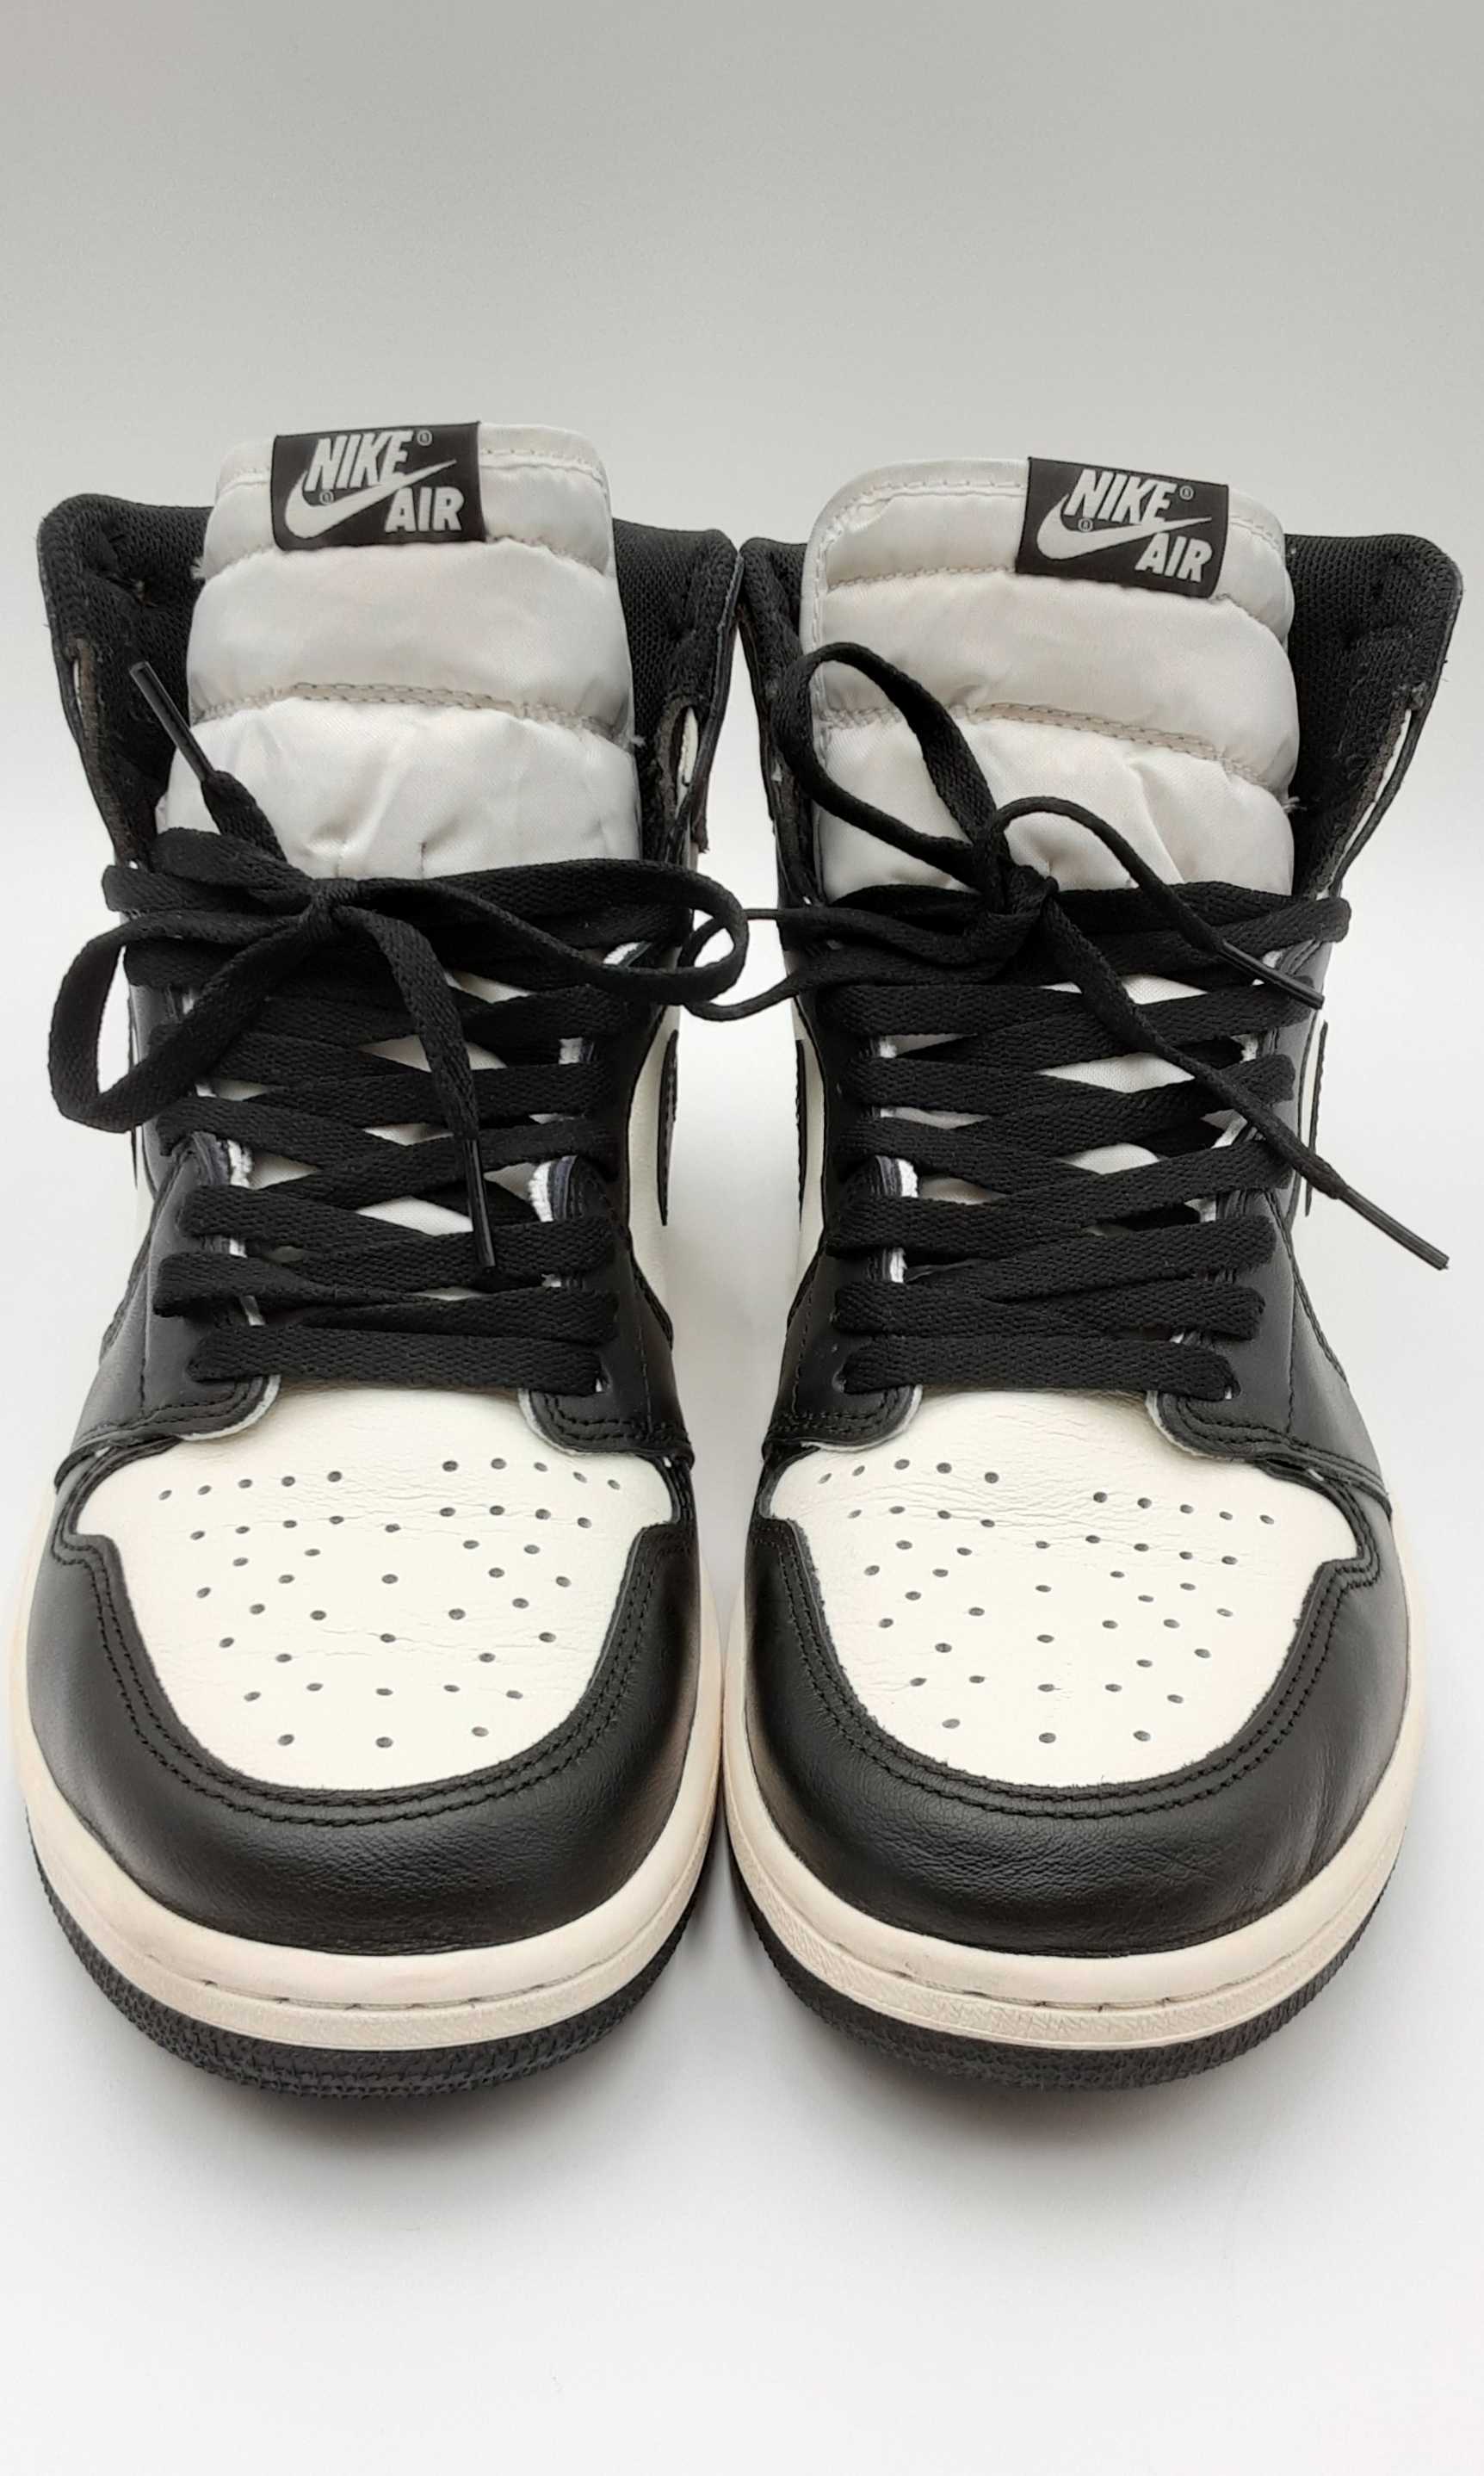 Nike Air Jordan 1 Retro Dark Mocha High Top Sneakers Size 12  Eblxzdu144030004959